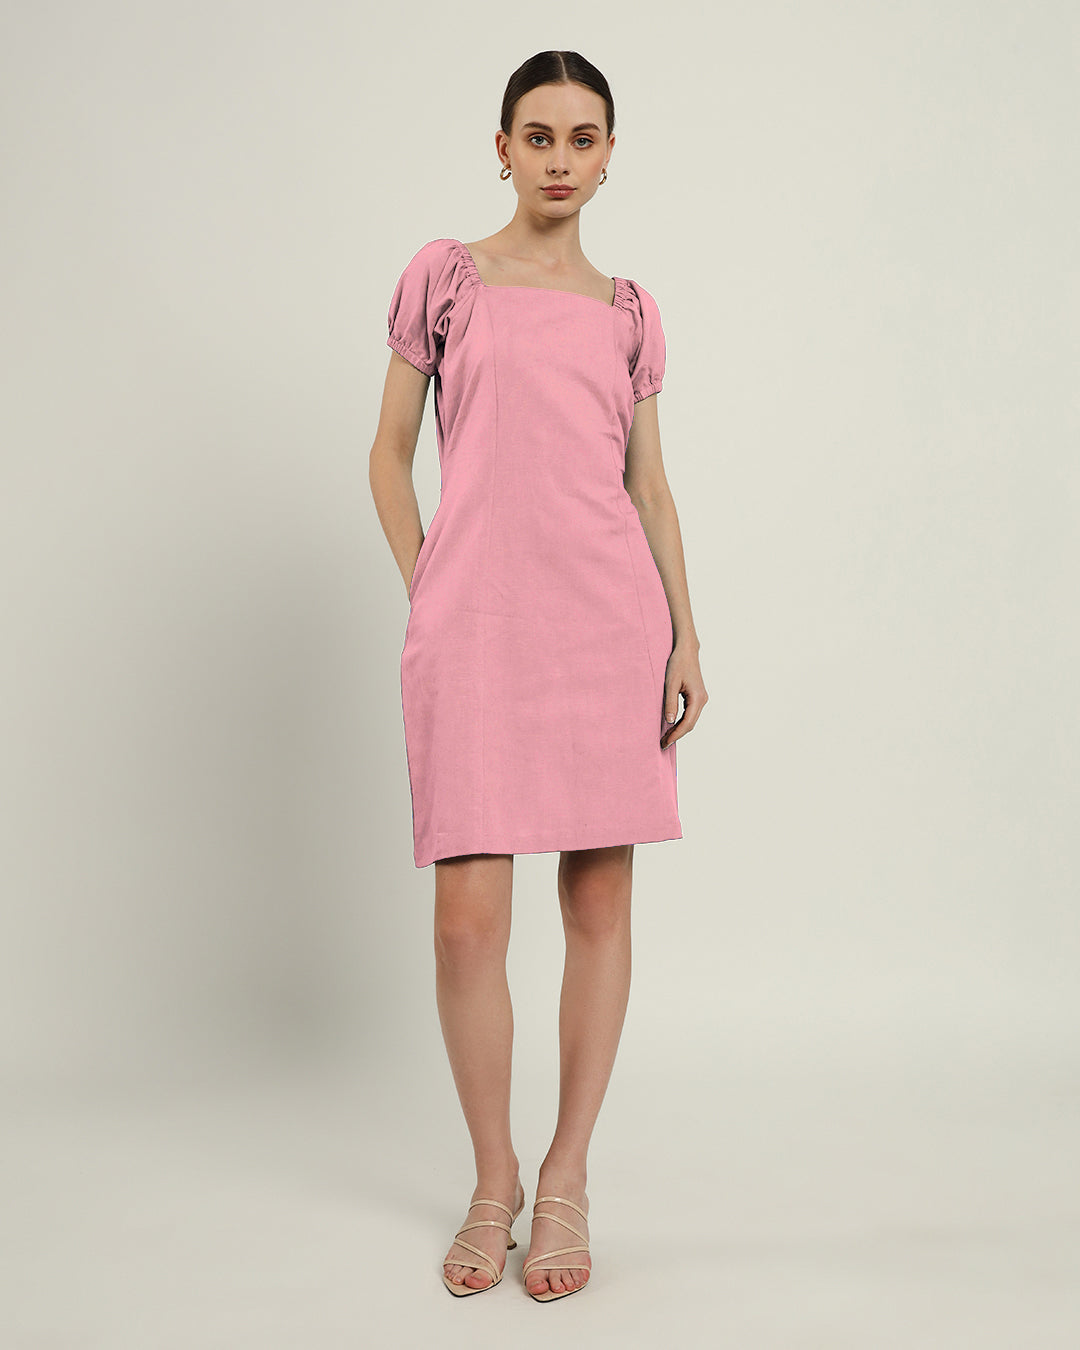 The Arar Fondant Pink Dress